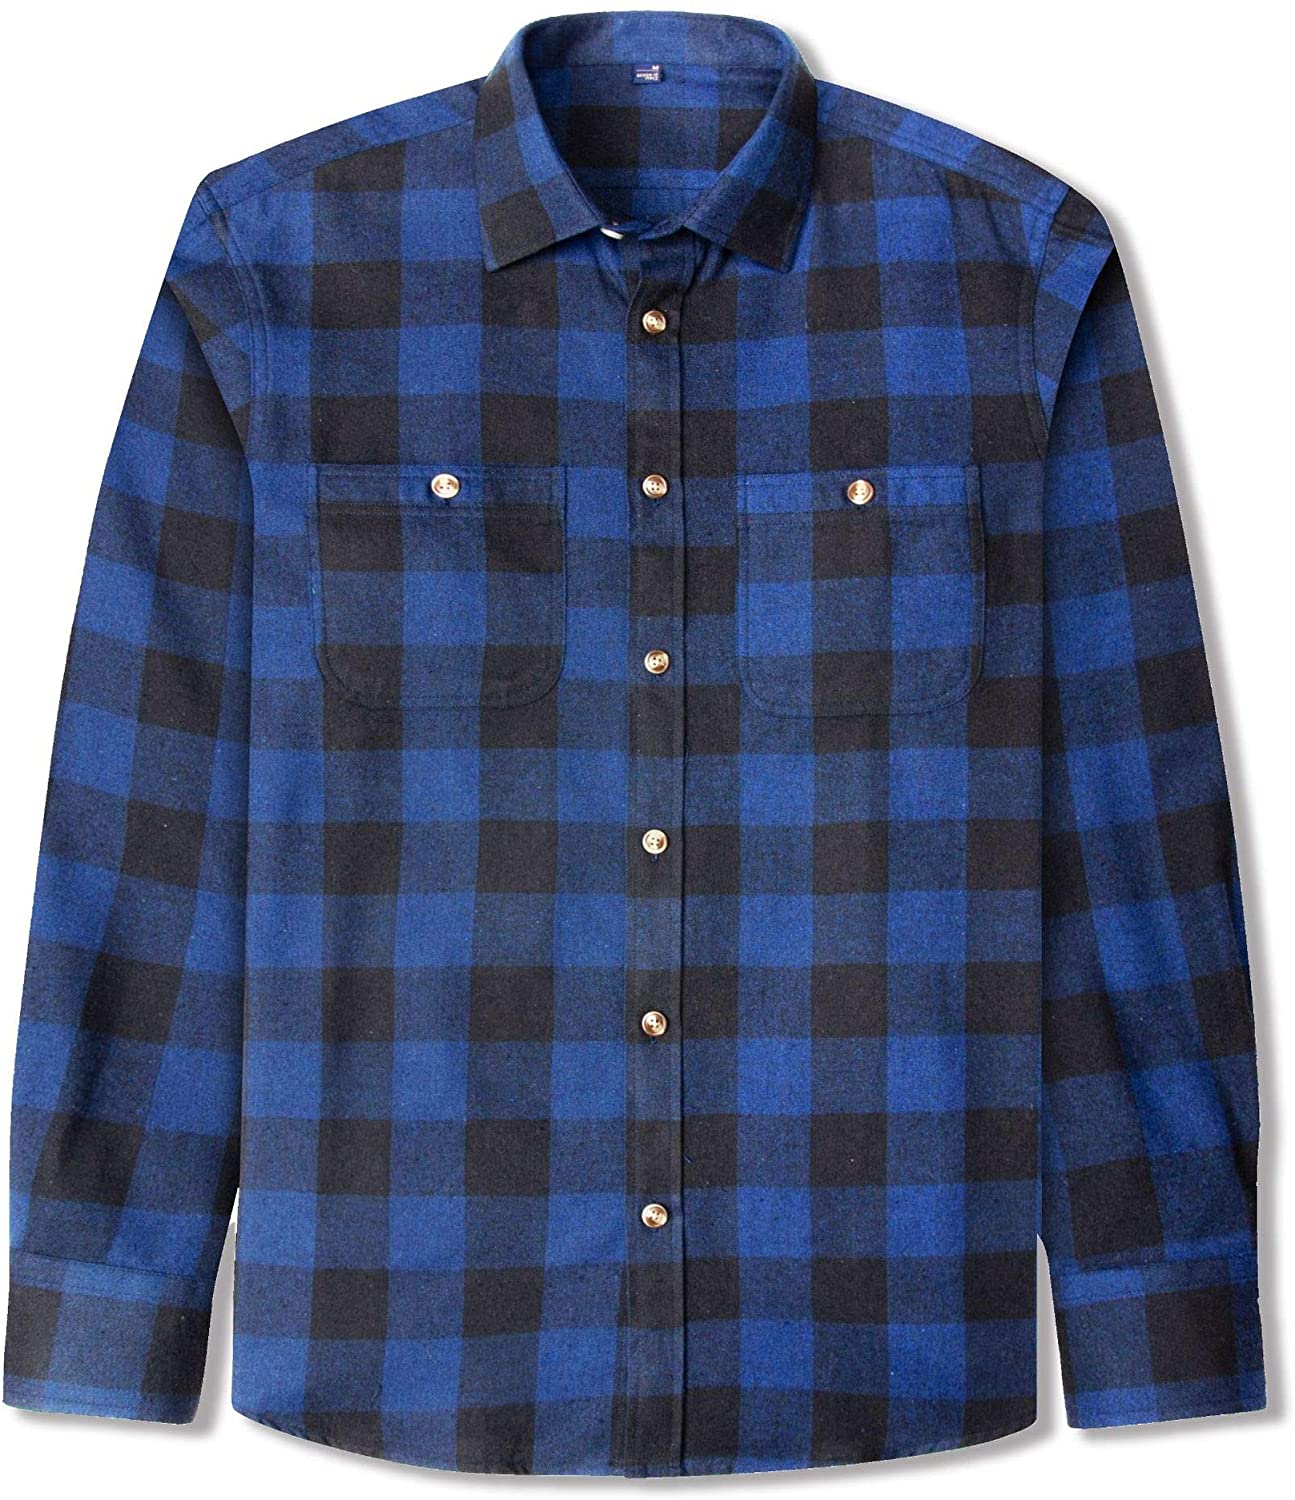 J.VER Men's Flannel Plaid Shirts Long Sleeve Regular Fit Casual Button Down Shirt